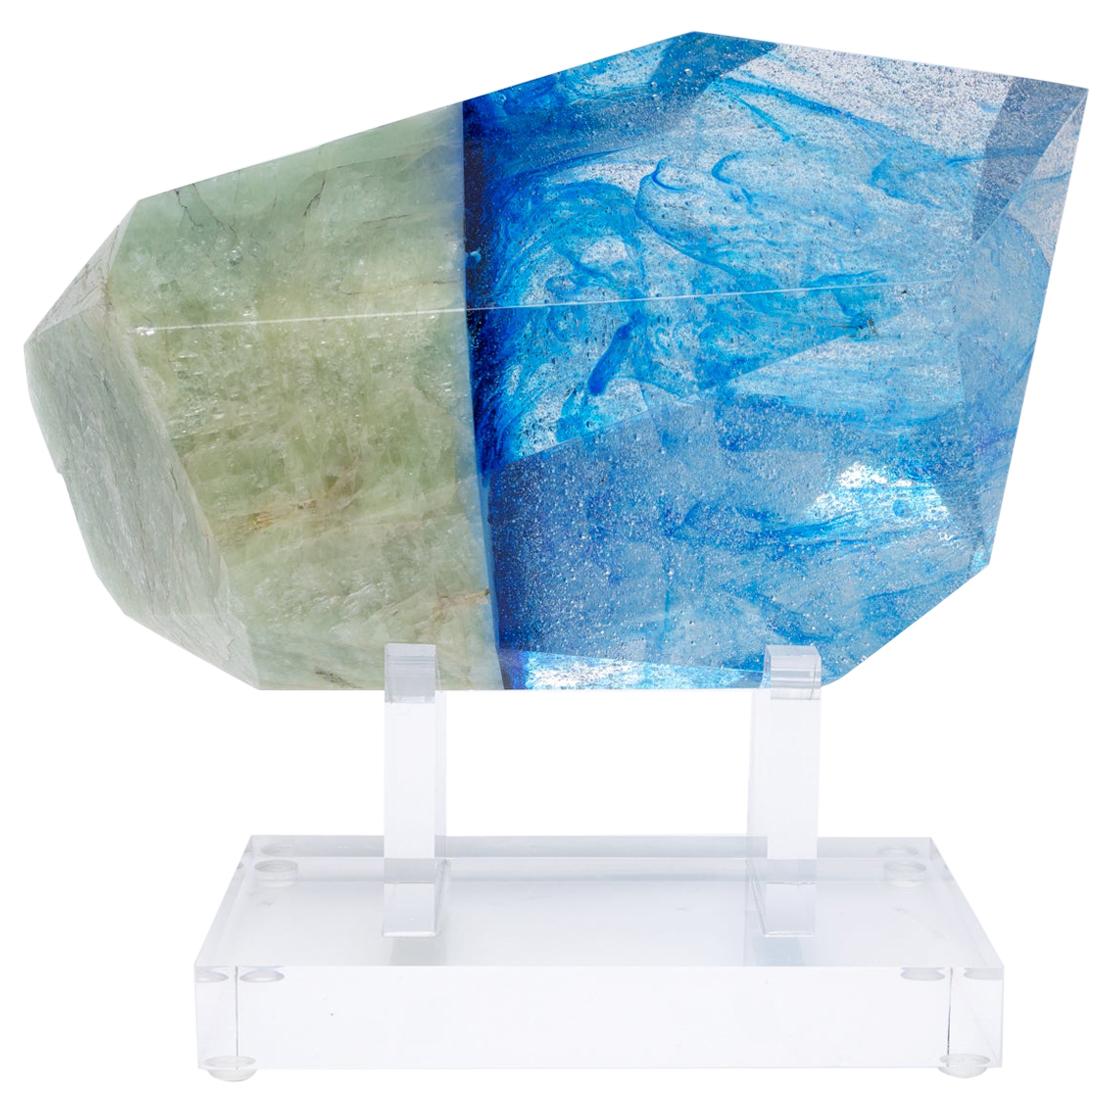 Brazilian Aquamarine and Blue Glass Sculpture on Acrylic Base